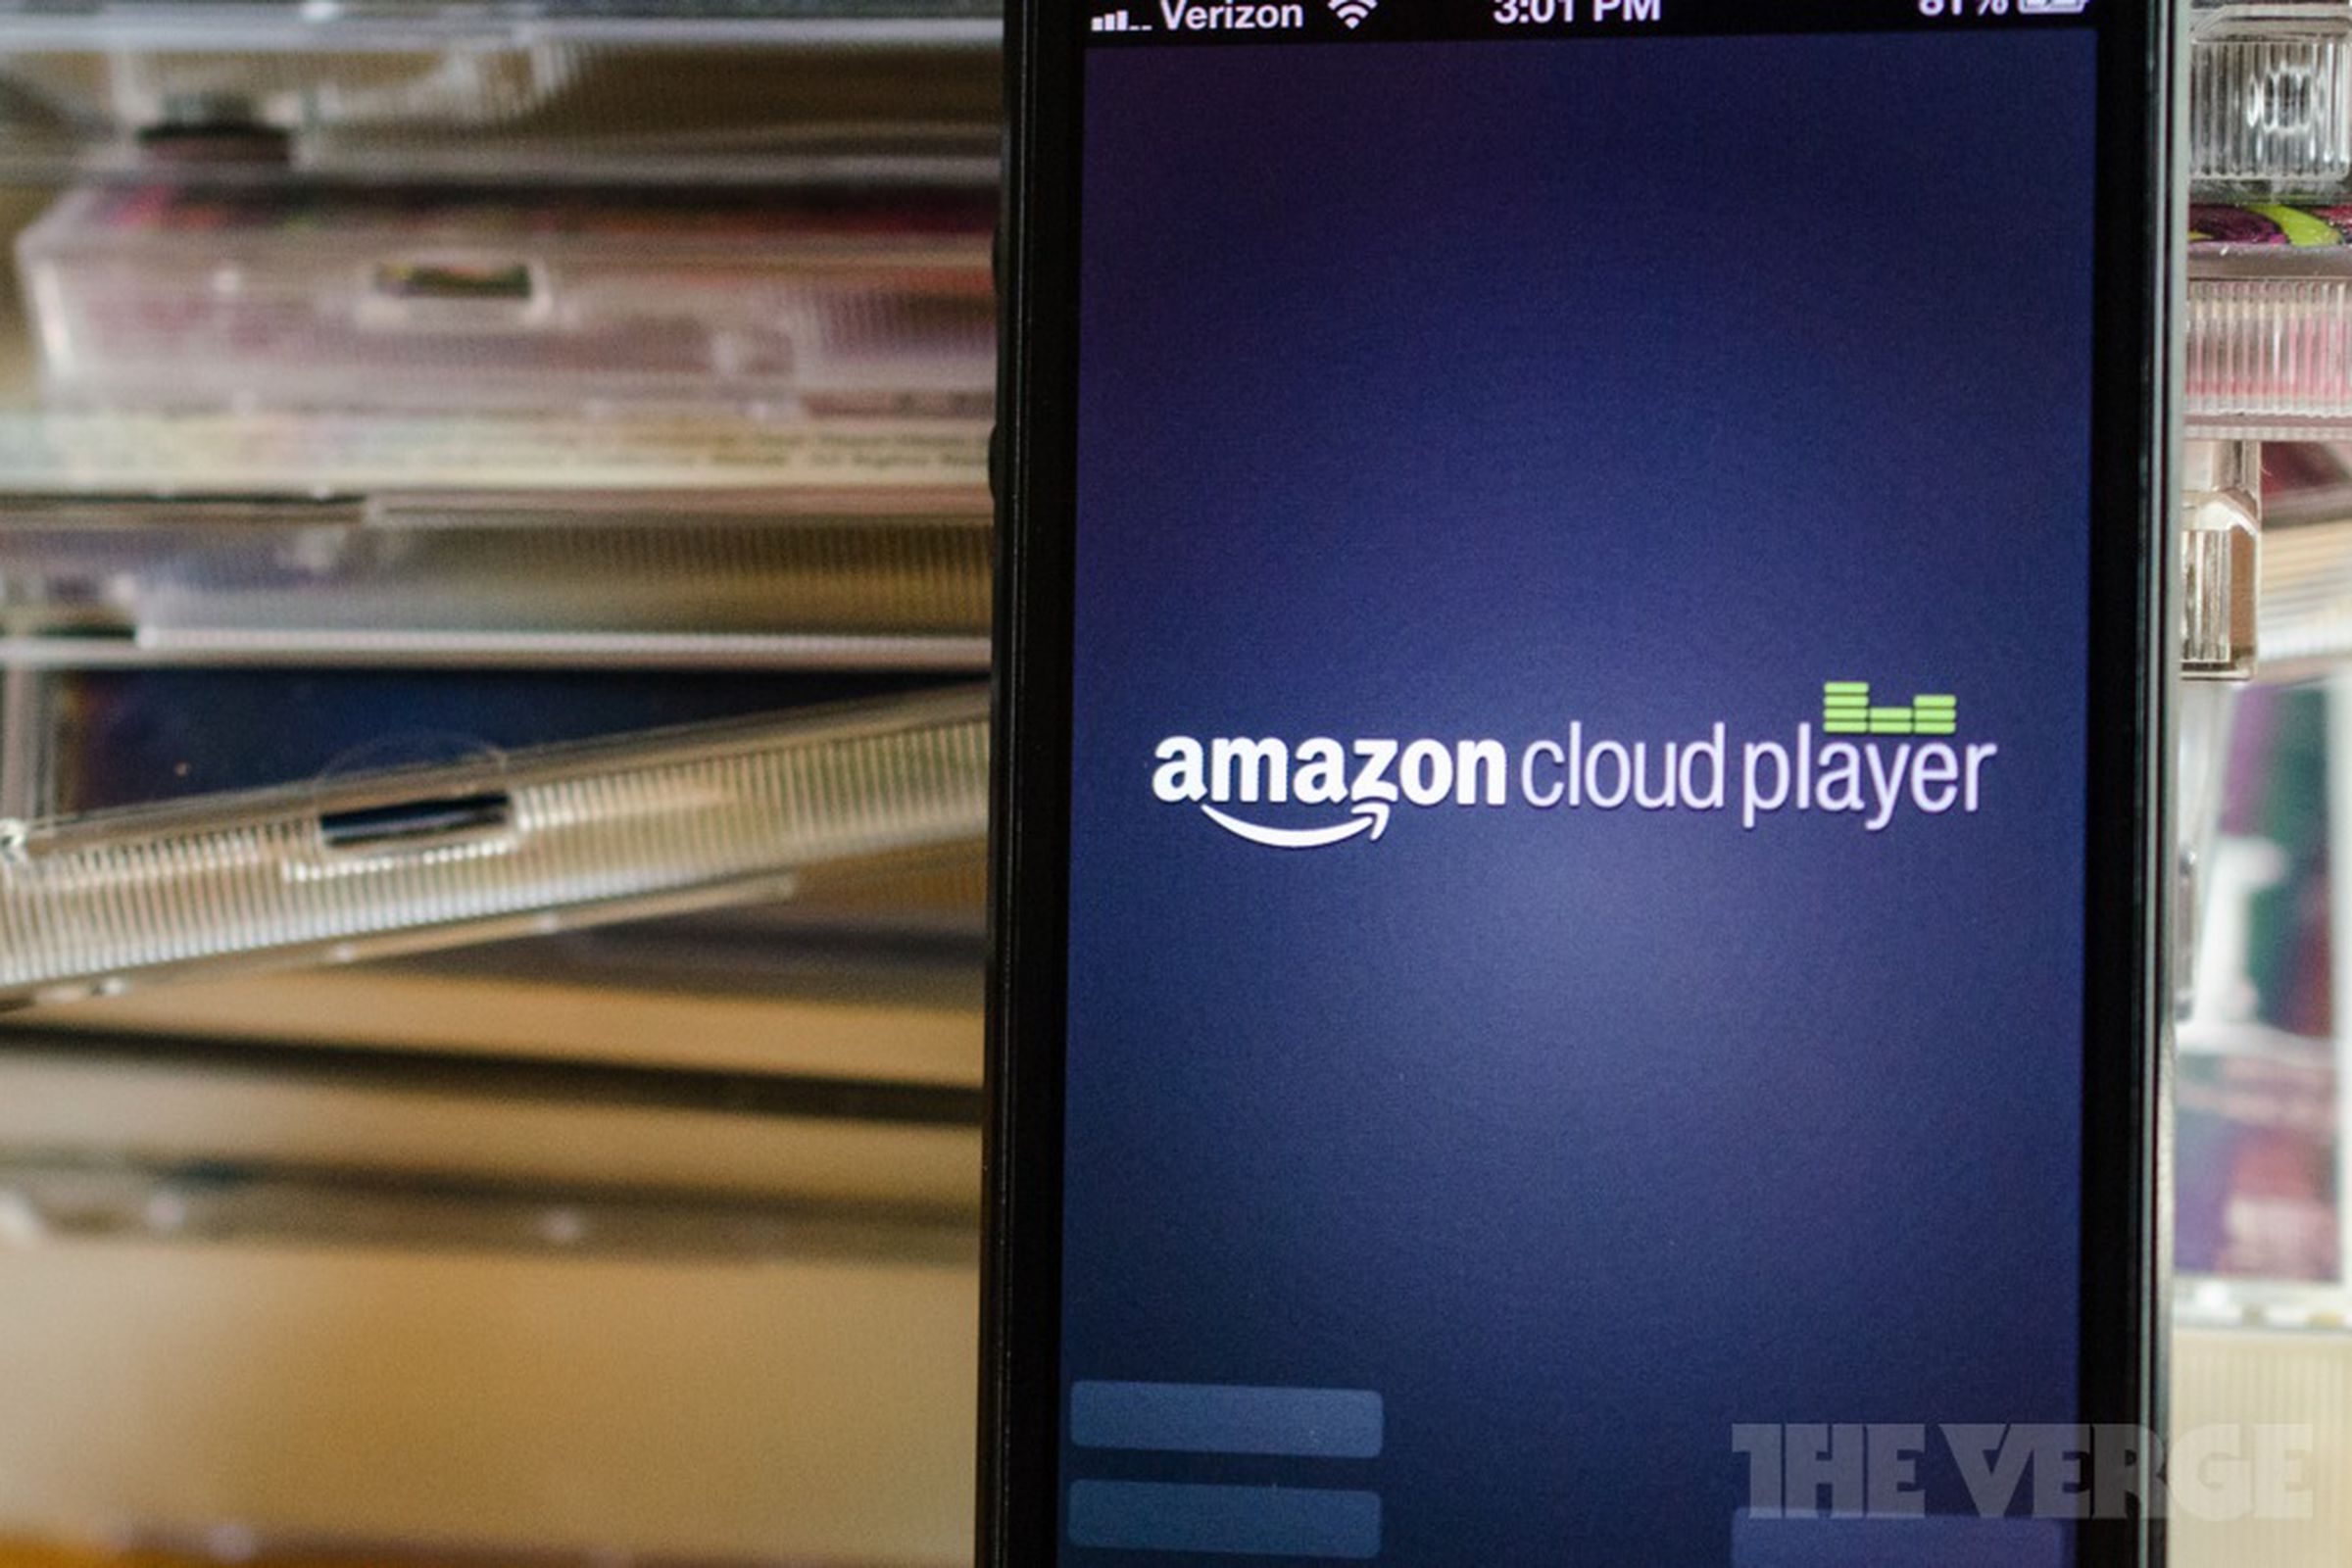 Amazon Cloud Player CD stock